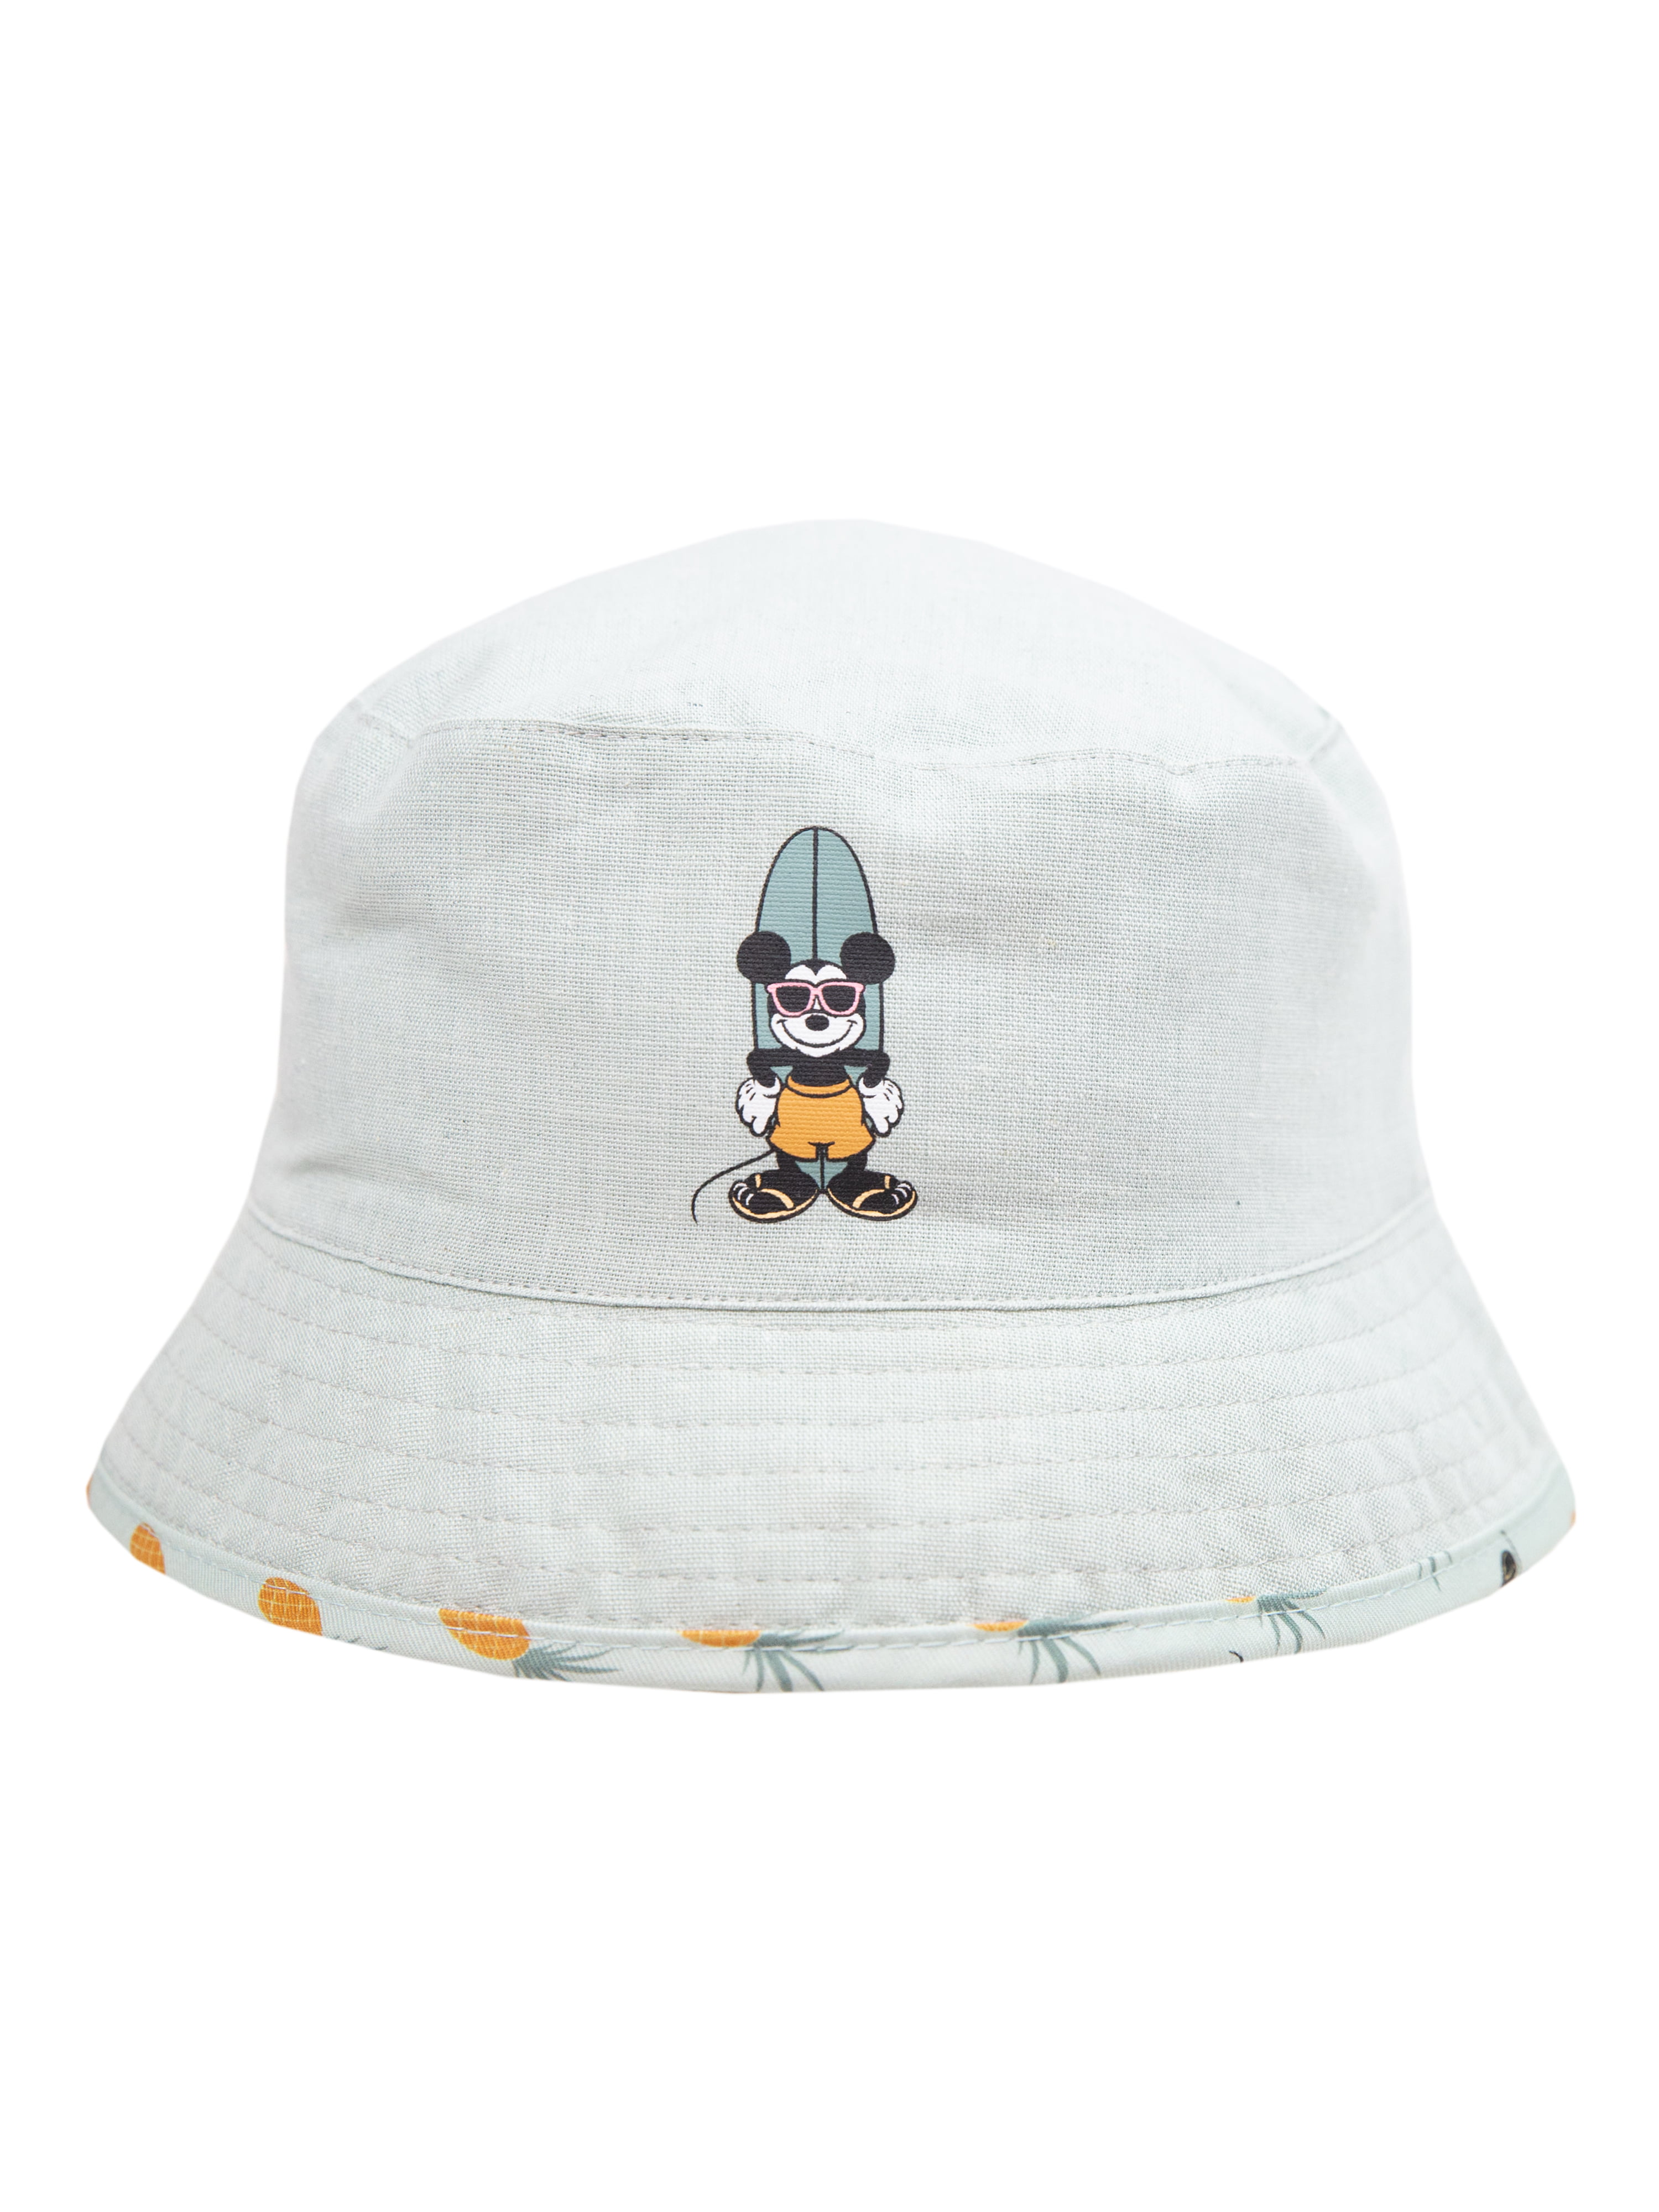 Disney Mickey Mouse Toddler Boys Reversible Gray Bucket Style Swim Hat